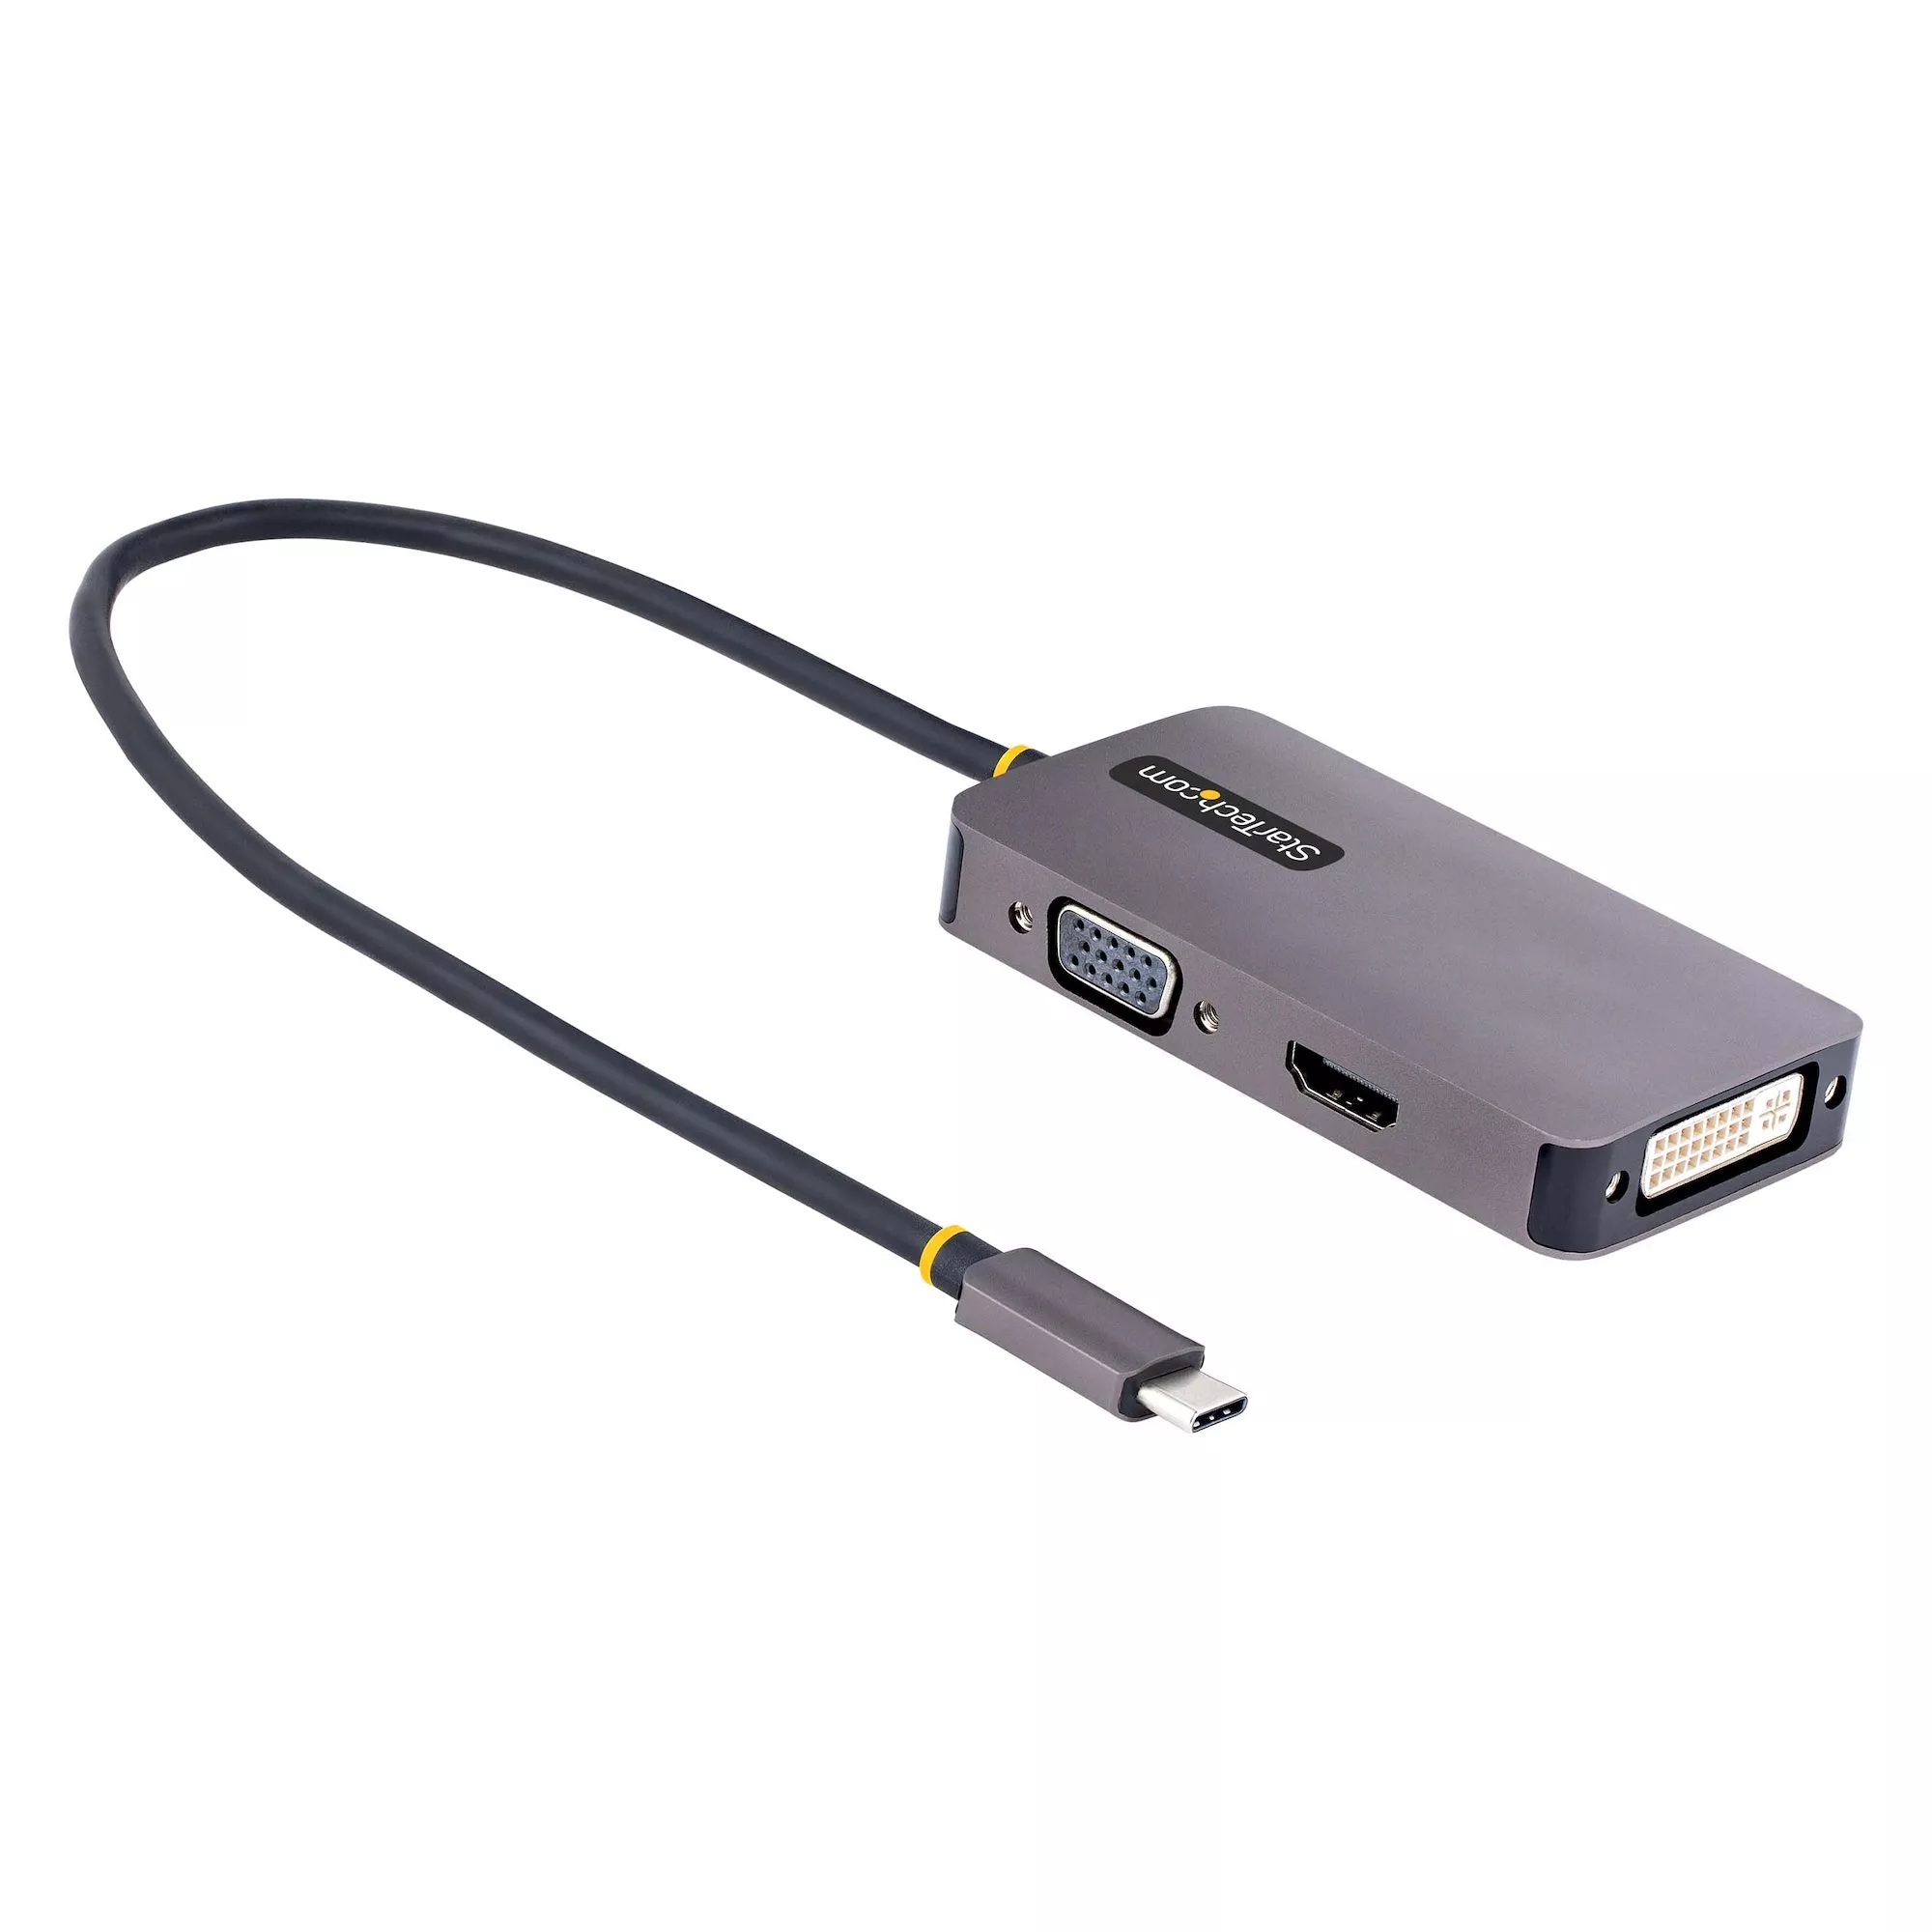 Revendeur officiel StarTech.com Adaptateur USB C vers HDMI VGA - Dock USB